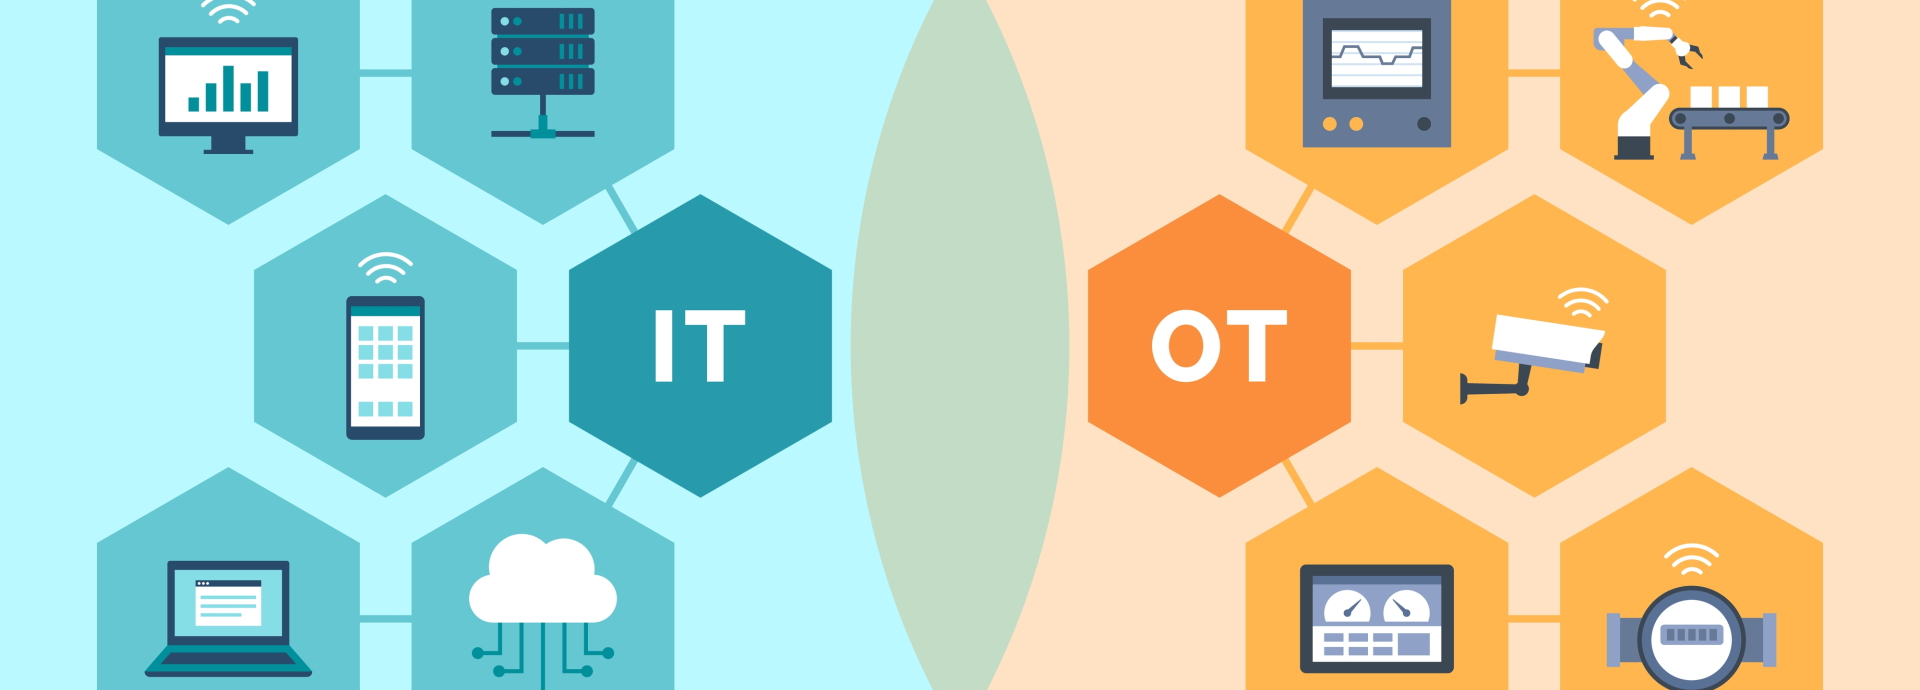 IT-OT Graphic